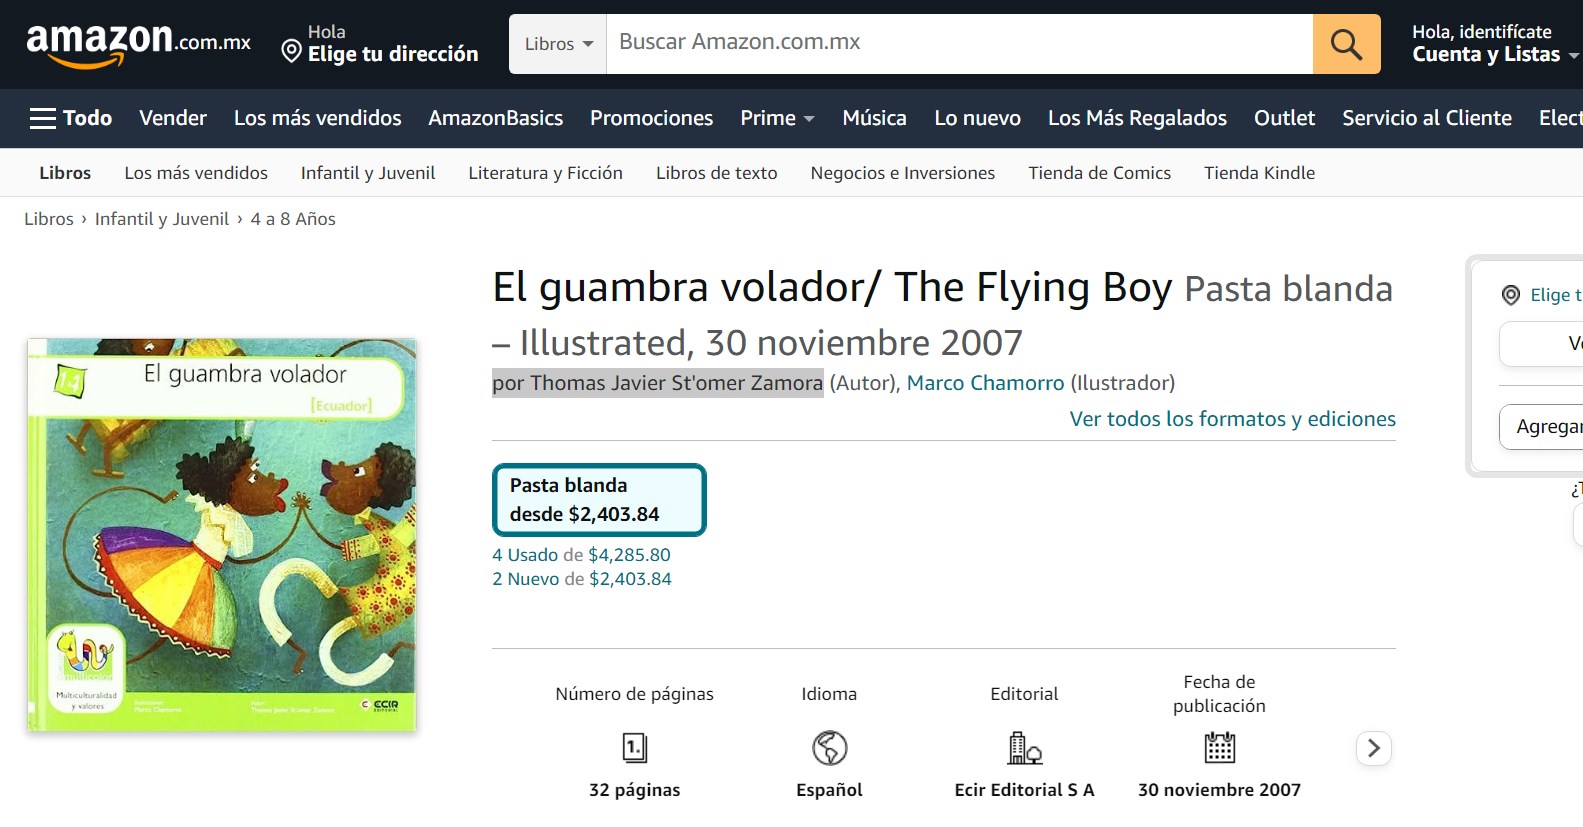 Libro: El guambra volador equador por Thomas Javier St'omer Zamora